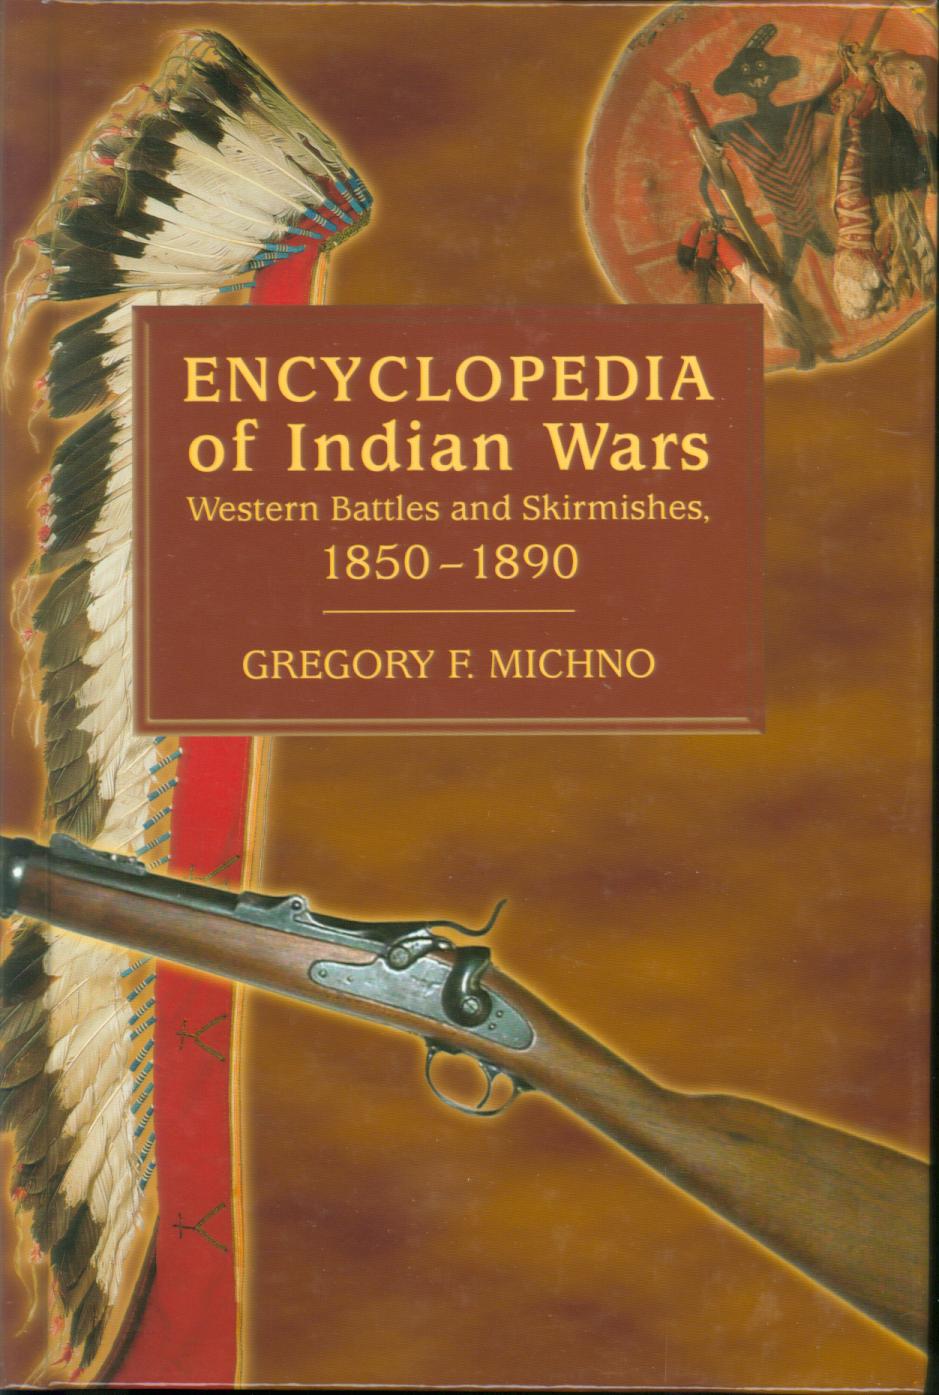 ENCYLOPEDIA OF INDIAN WARS: western battles and skirmishes, 1850-1890